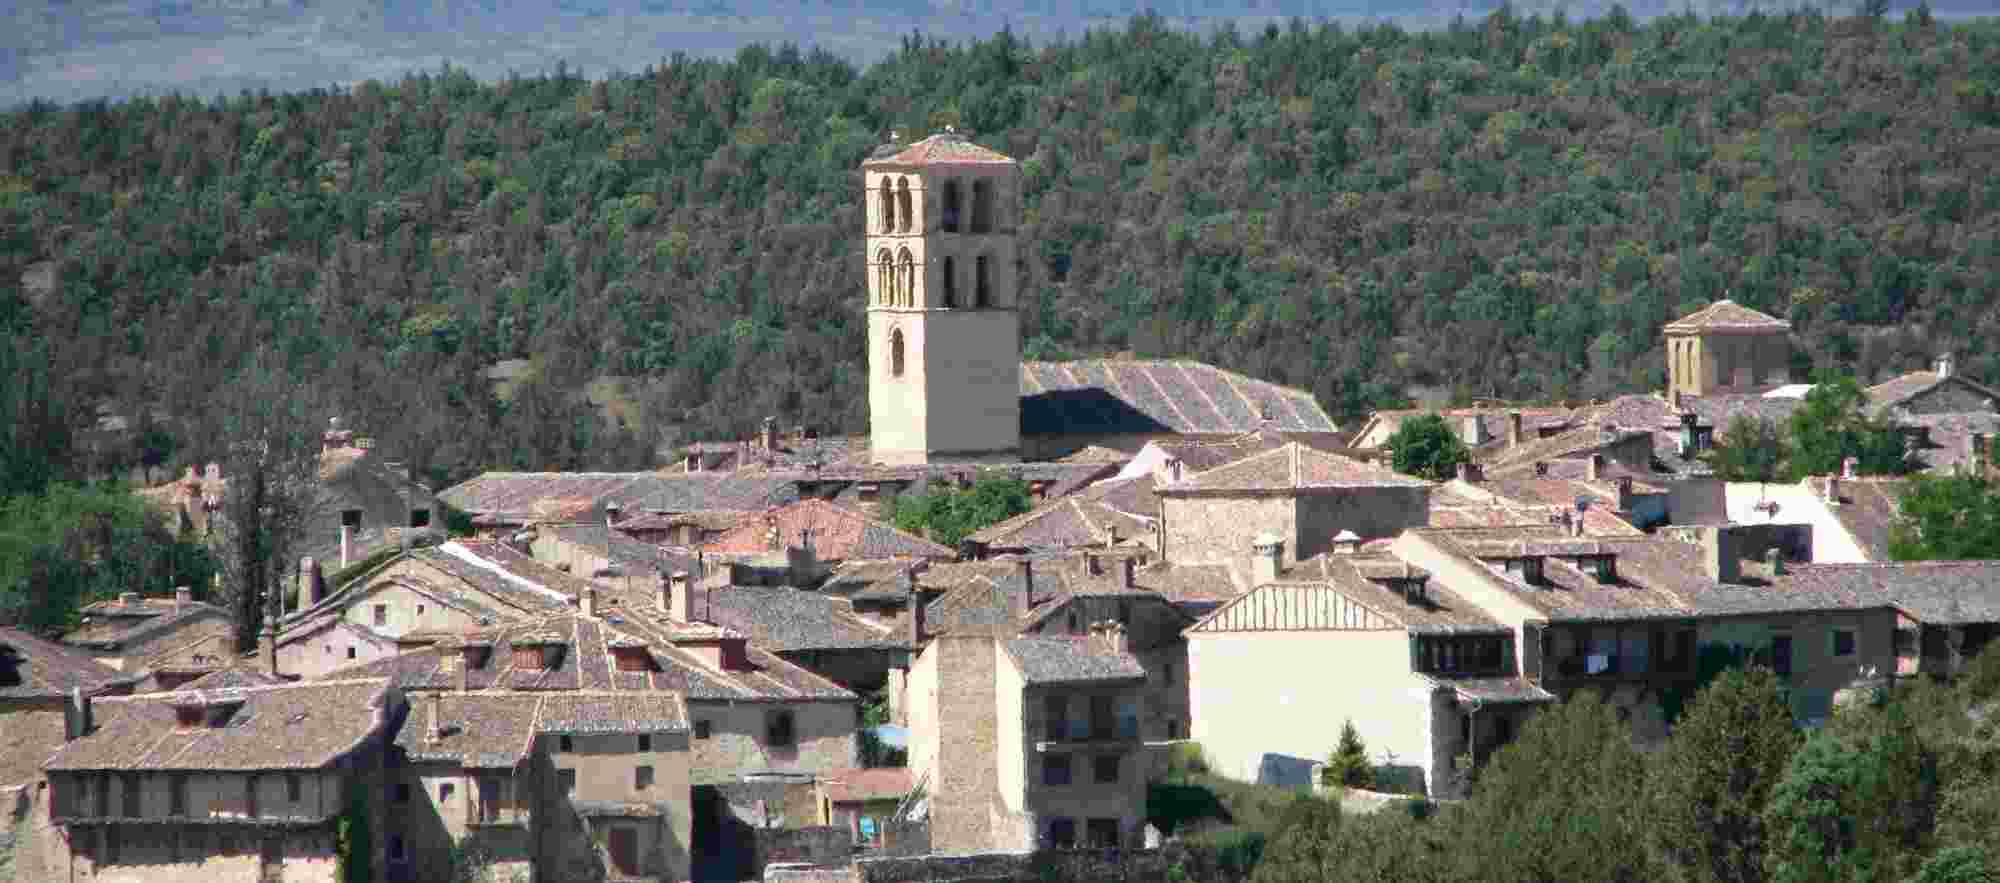 Beautiful village in Segovia